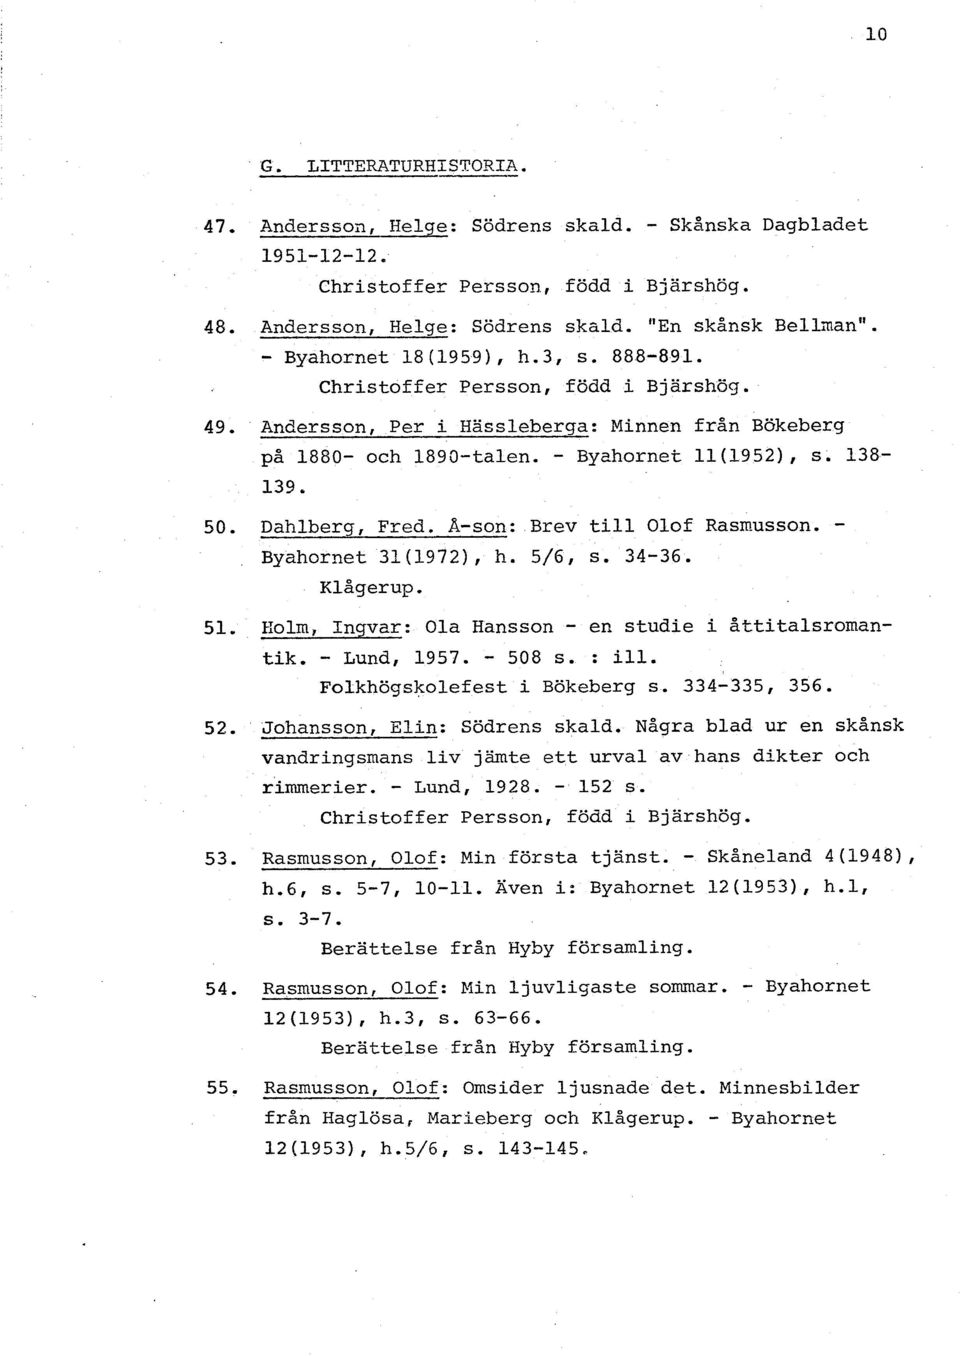 Dahlberg, Fred. A-son: Brev till Olof Rasmusson. - Byahornet 31(1972), h. 5/6, s. 34-36. Klågerup. 51, Elolm, Ingvar: Ola Hansson - en studie i åttitalsroman- tik. - Lund, 1957. - 508 s. : ill.